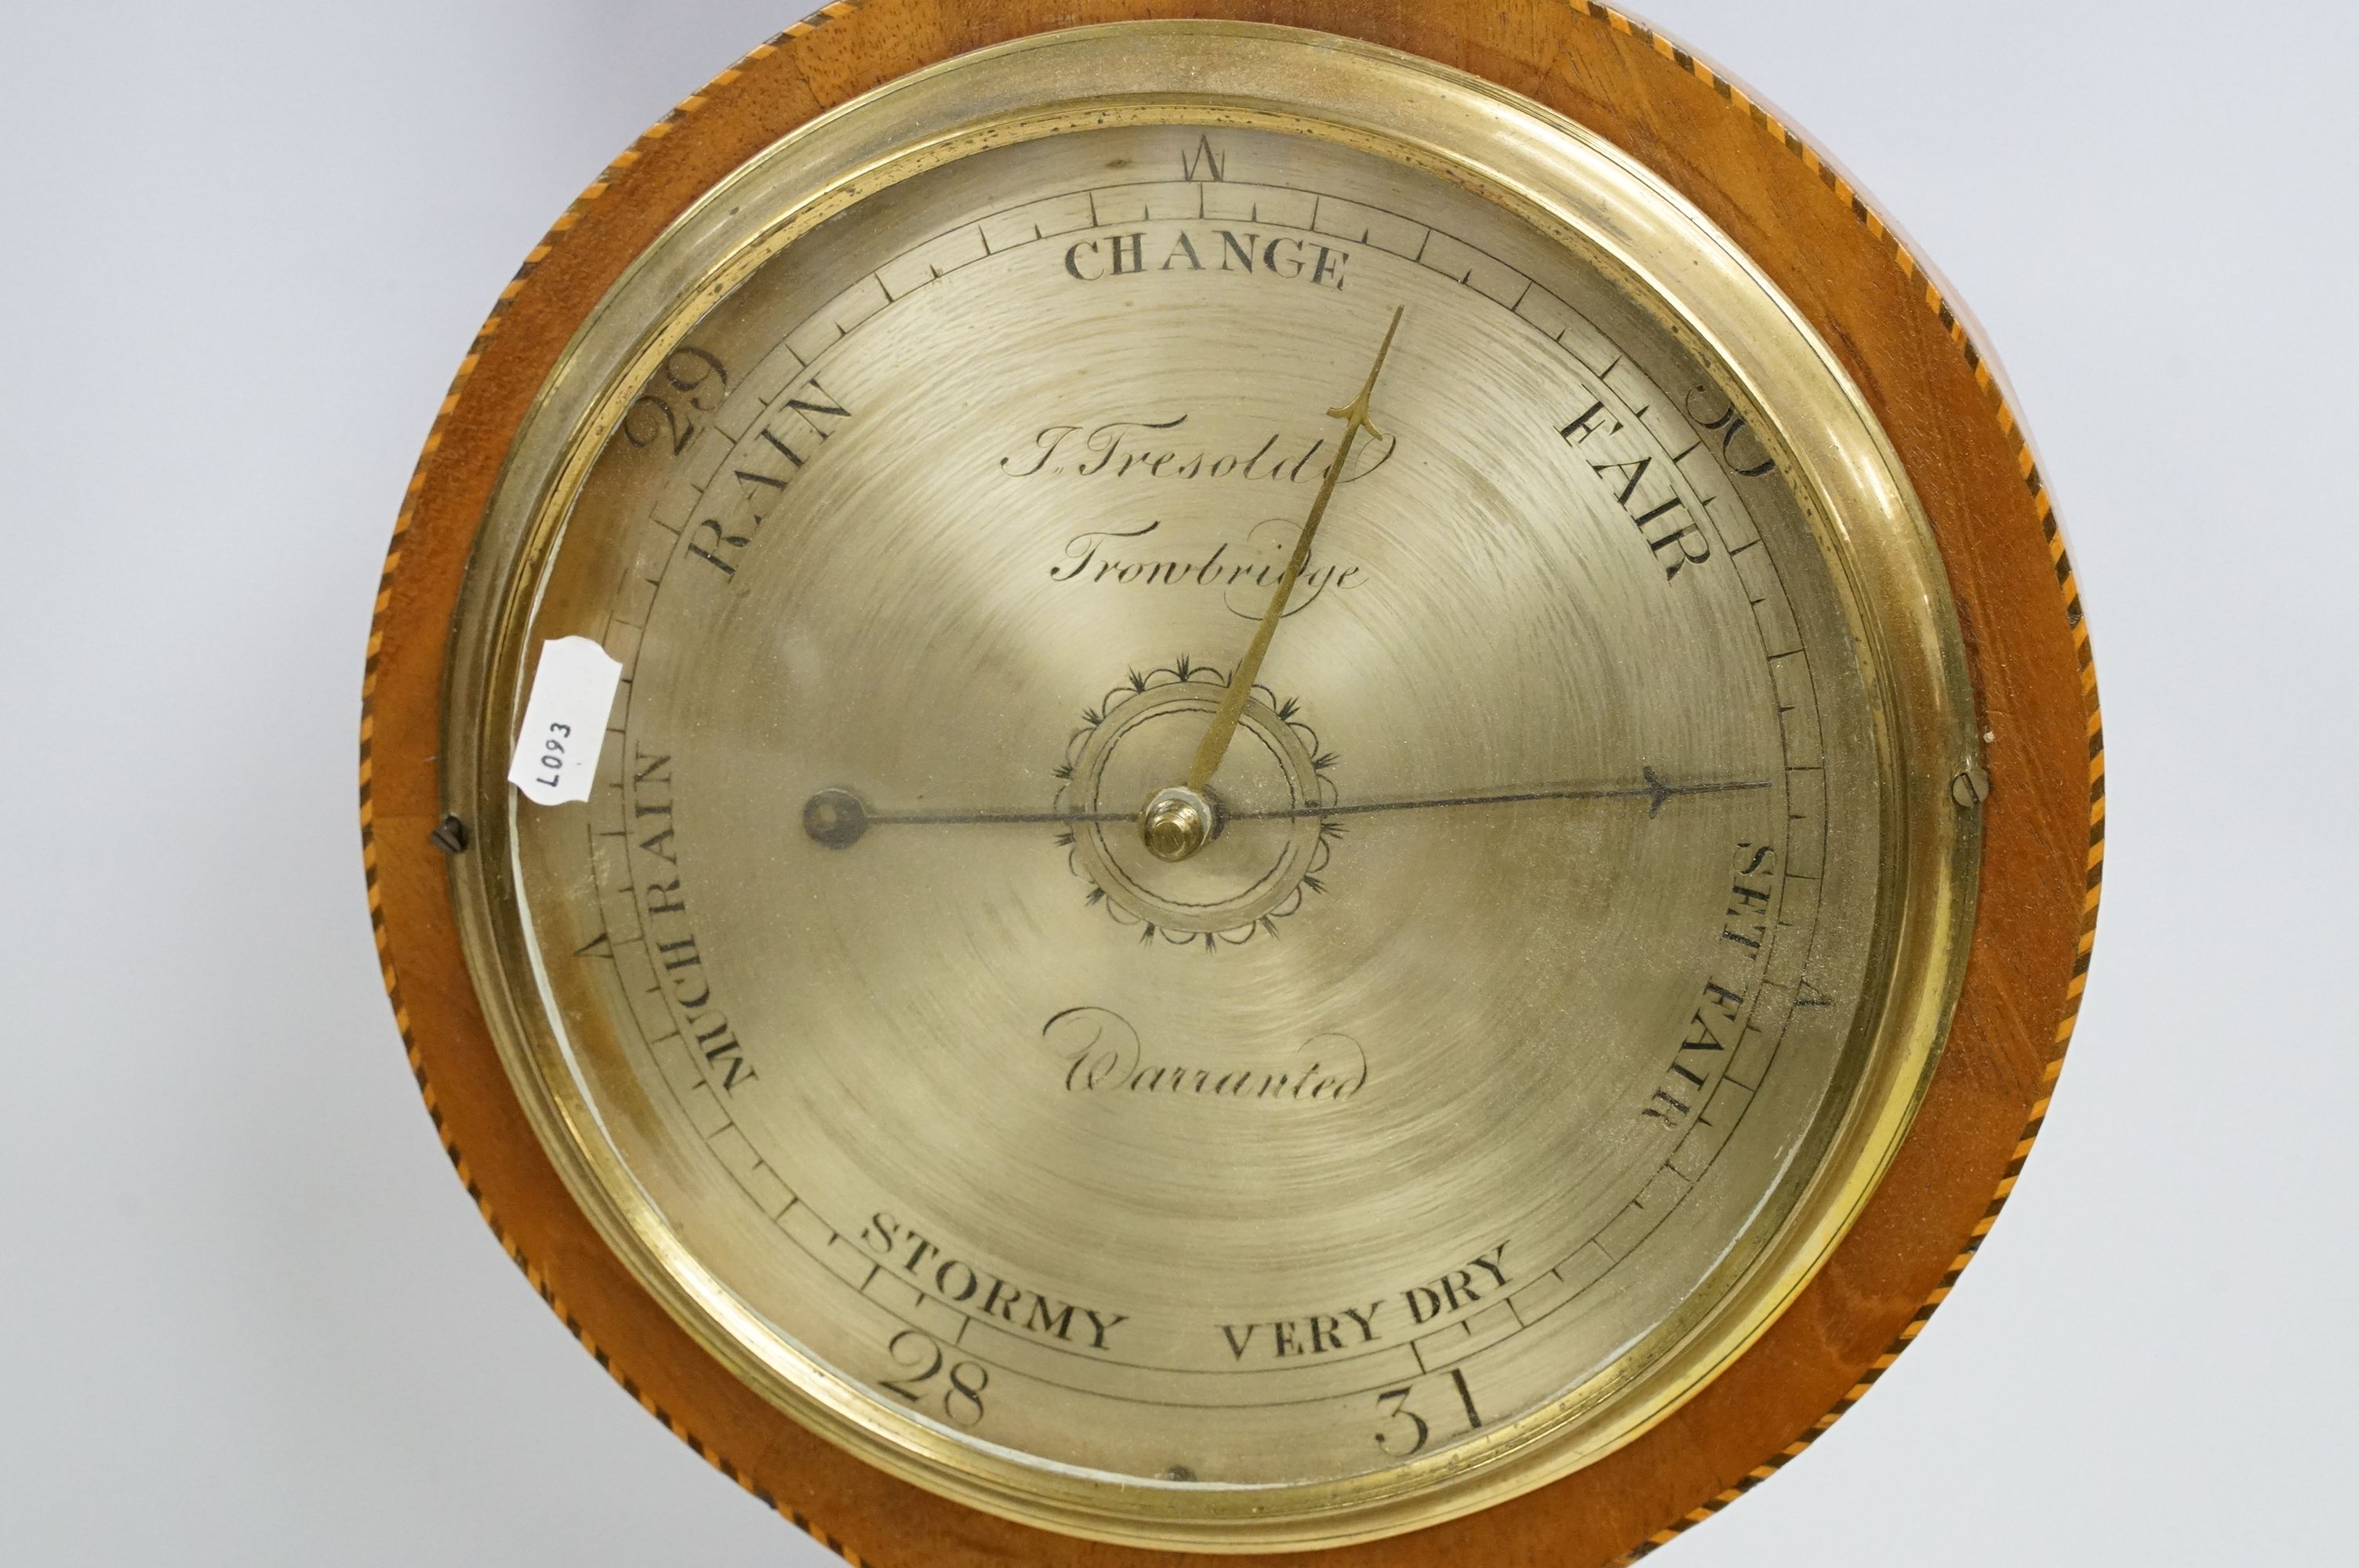 19th Century J Fresoldi of Trowbridge barometer having shell form box wood inlay. Measures 99cm - Image 2 of 8